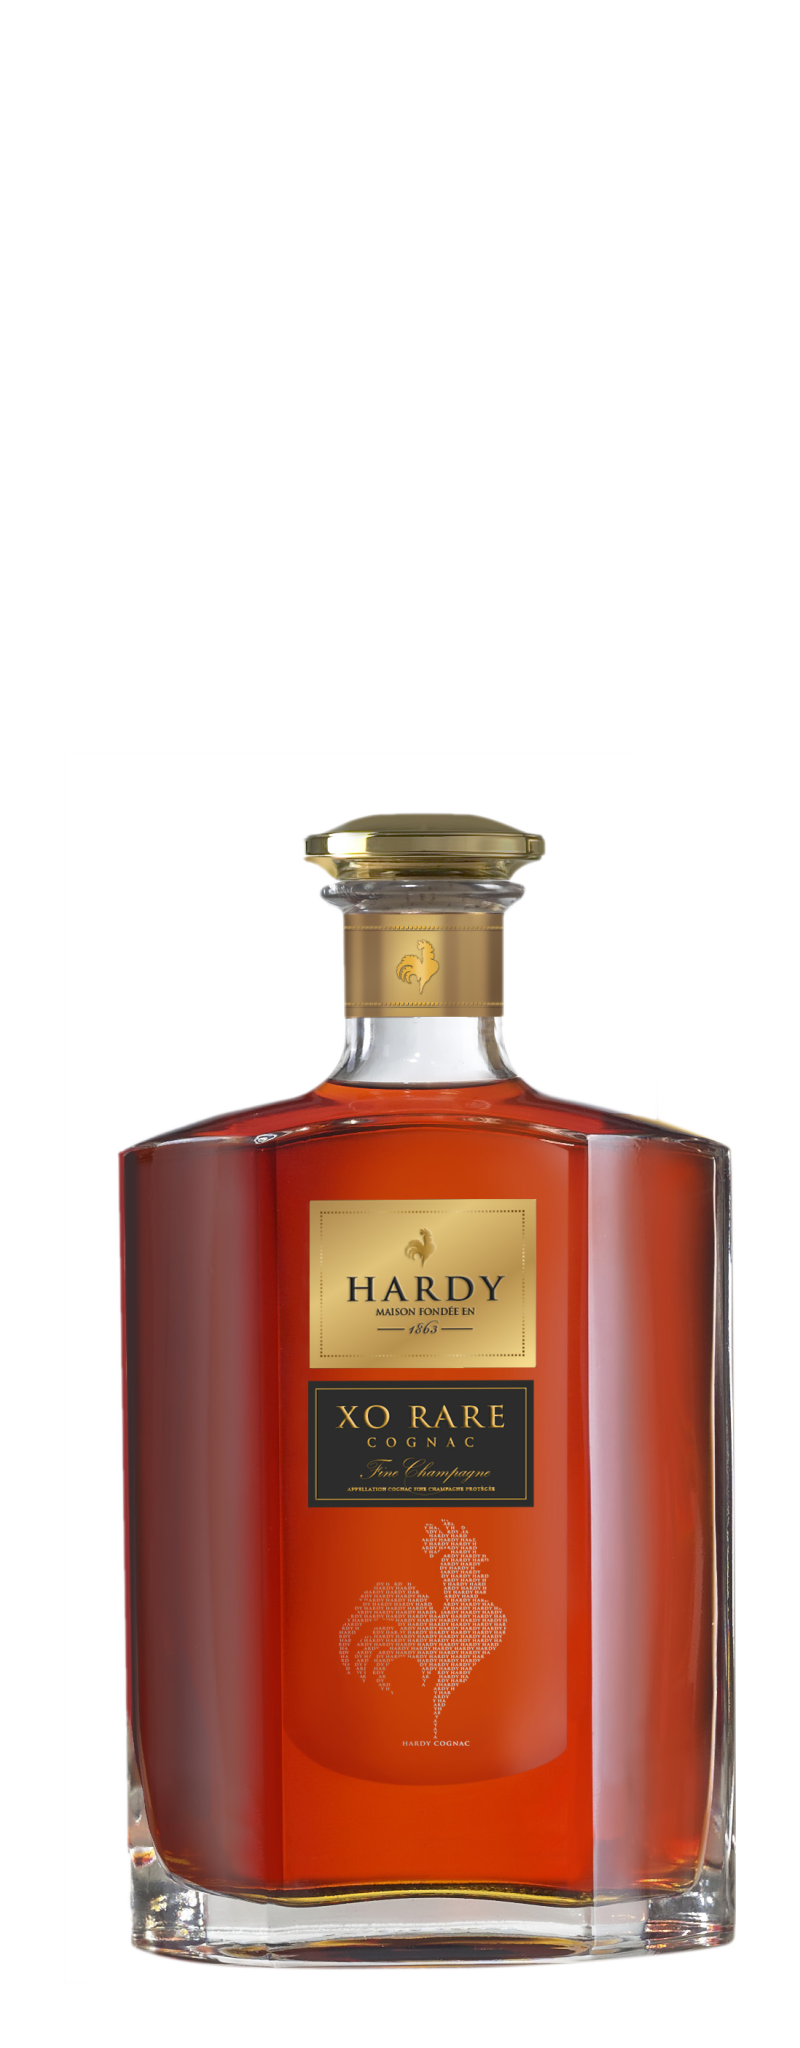 Hardy Cognac XO Rare  - 700ml